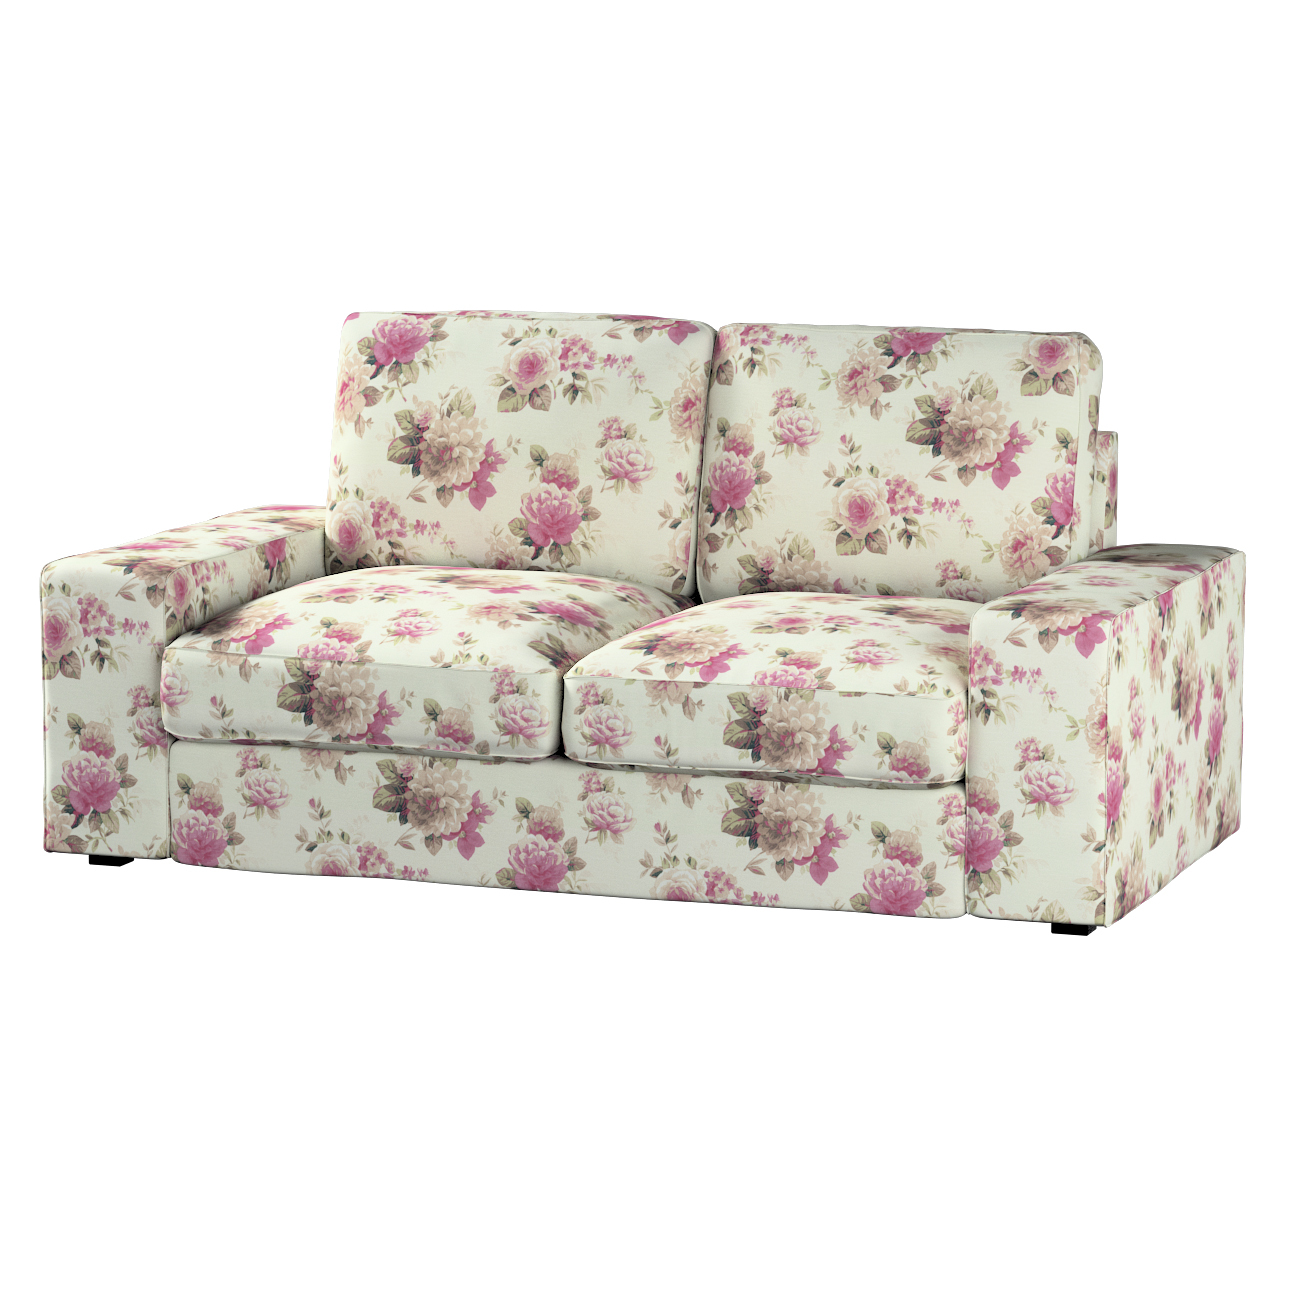 Bezug für Kivik 2-Sitzer Sofa, beige- rosa, Bezug für Sofa Kivik 2-Sitzer, günstig online kaufen